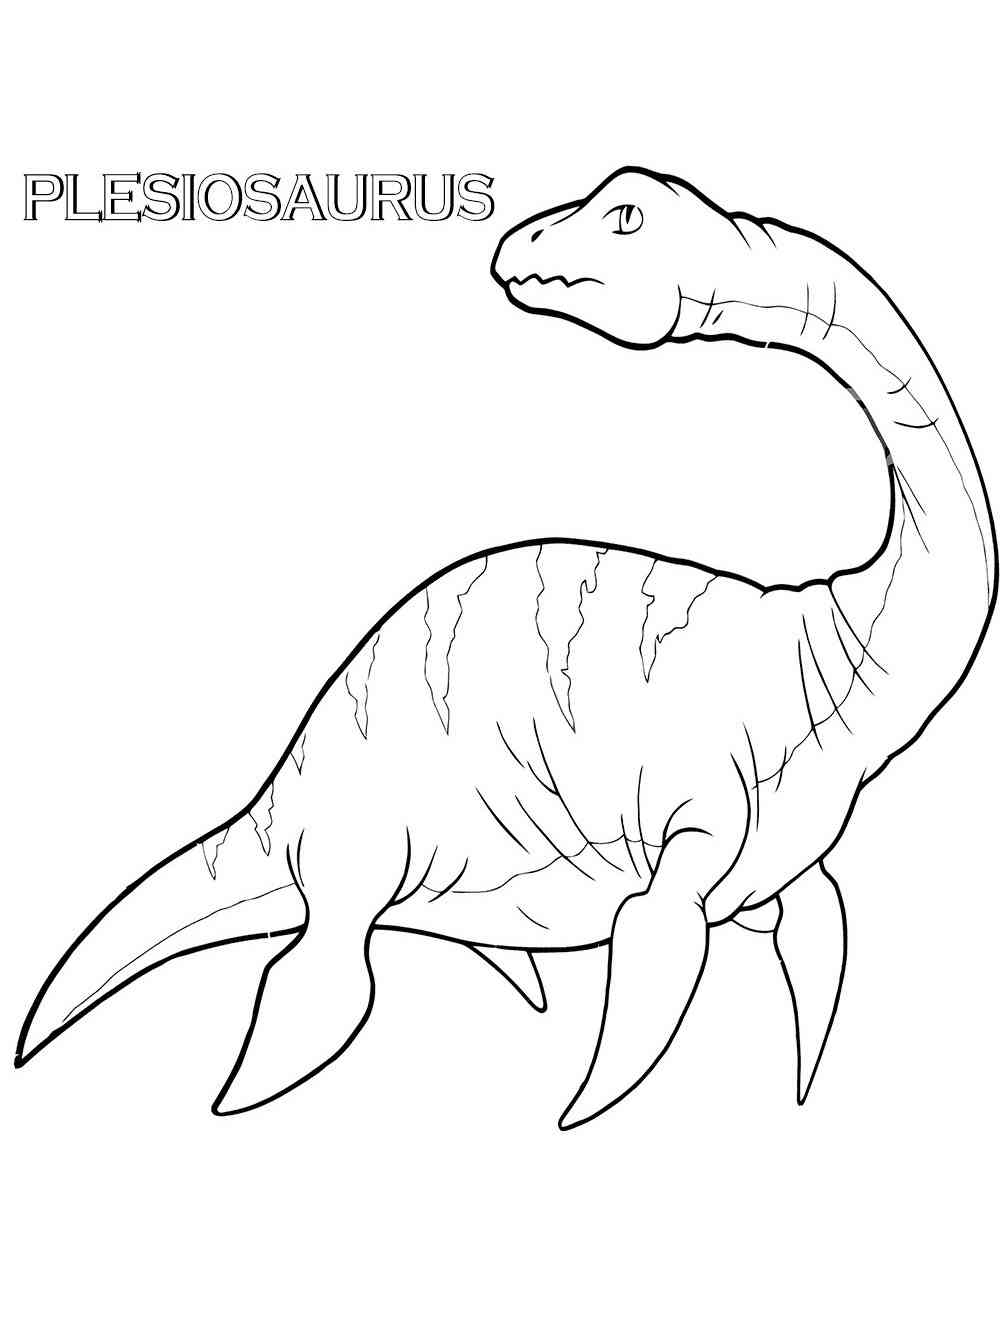 Big Plesiosaurus coloring page